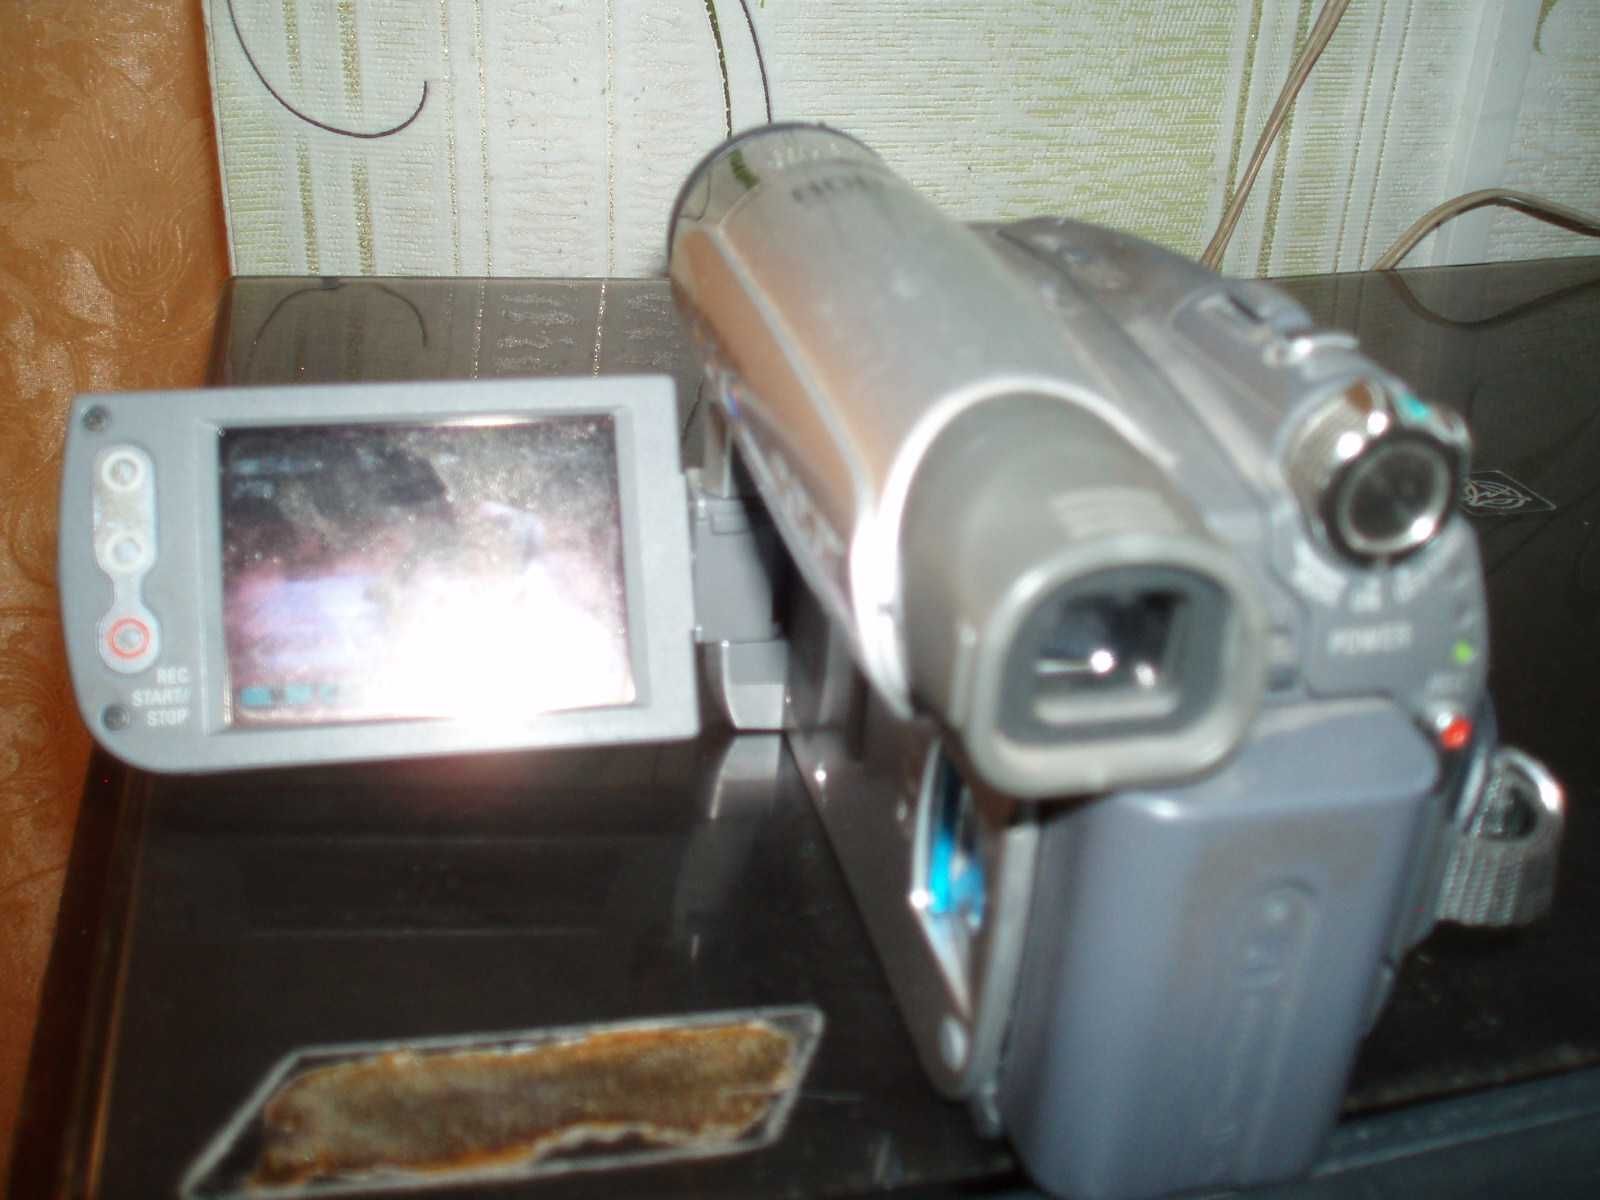 видеокамера SONY DCR-36